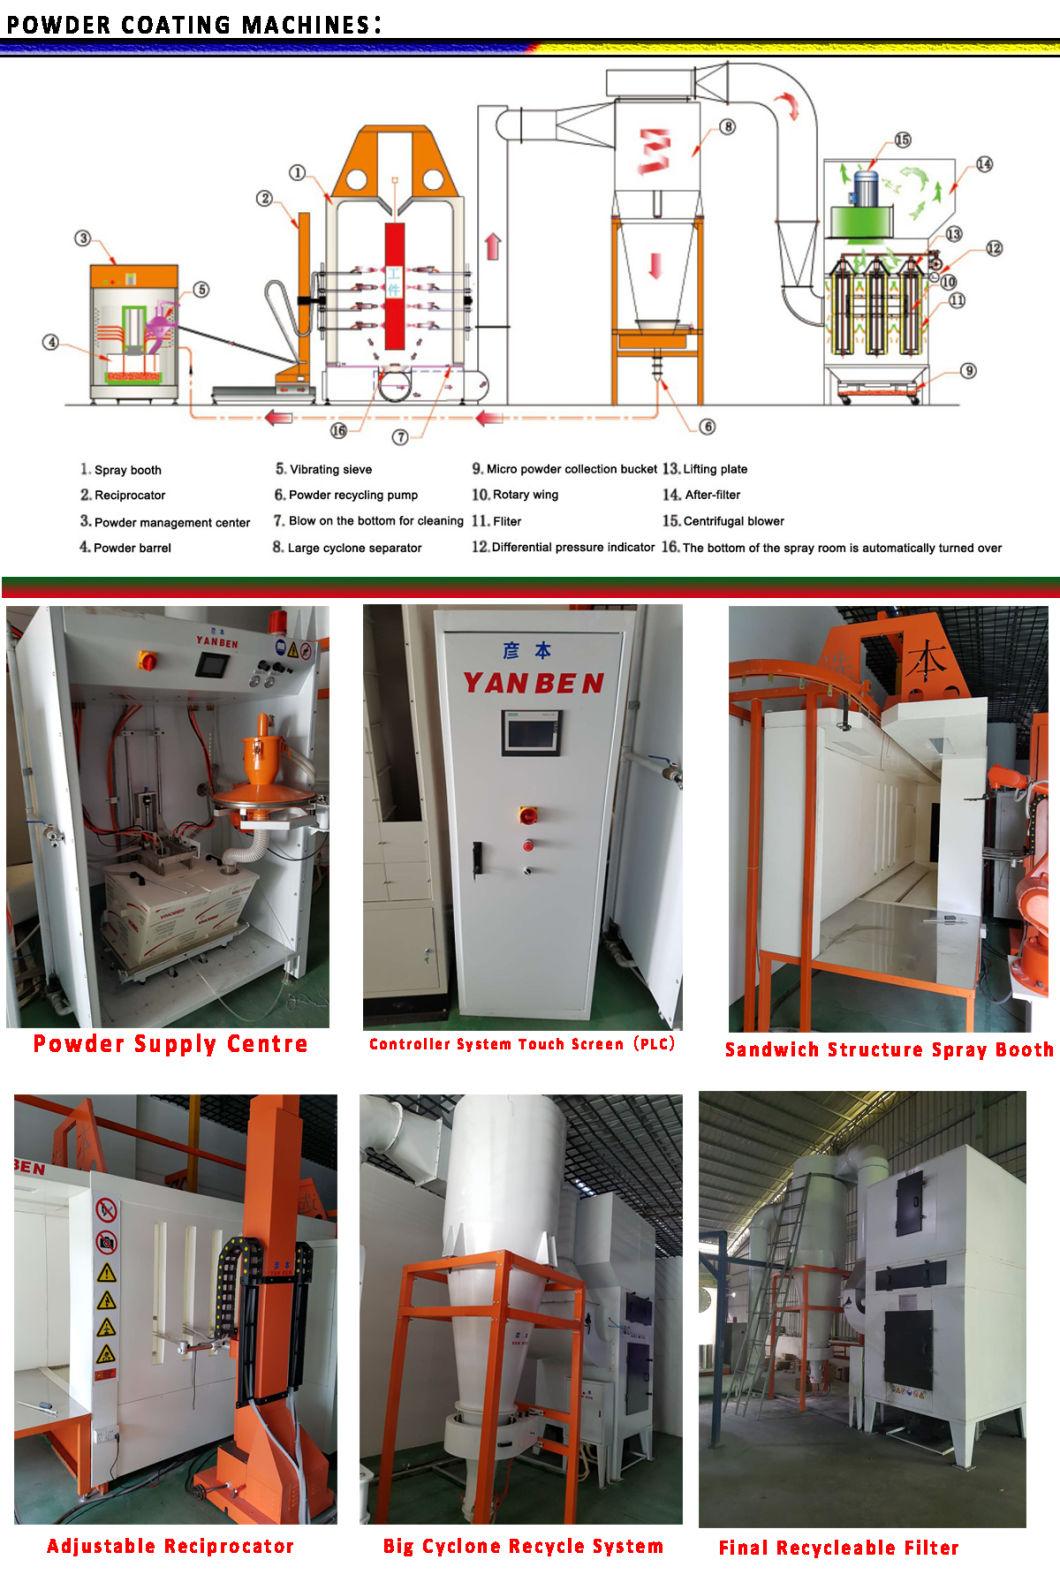 Automatic Powder Coating Machine Reciprocator for Powder Coating Spray Booth